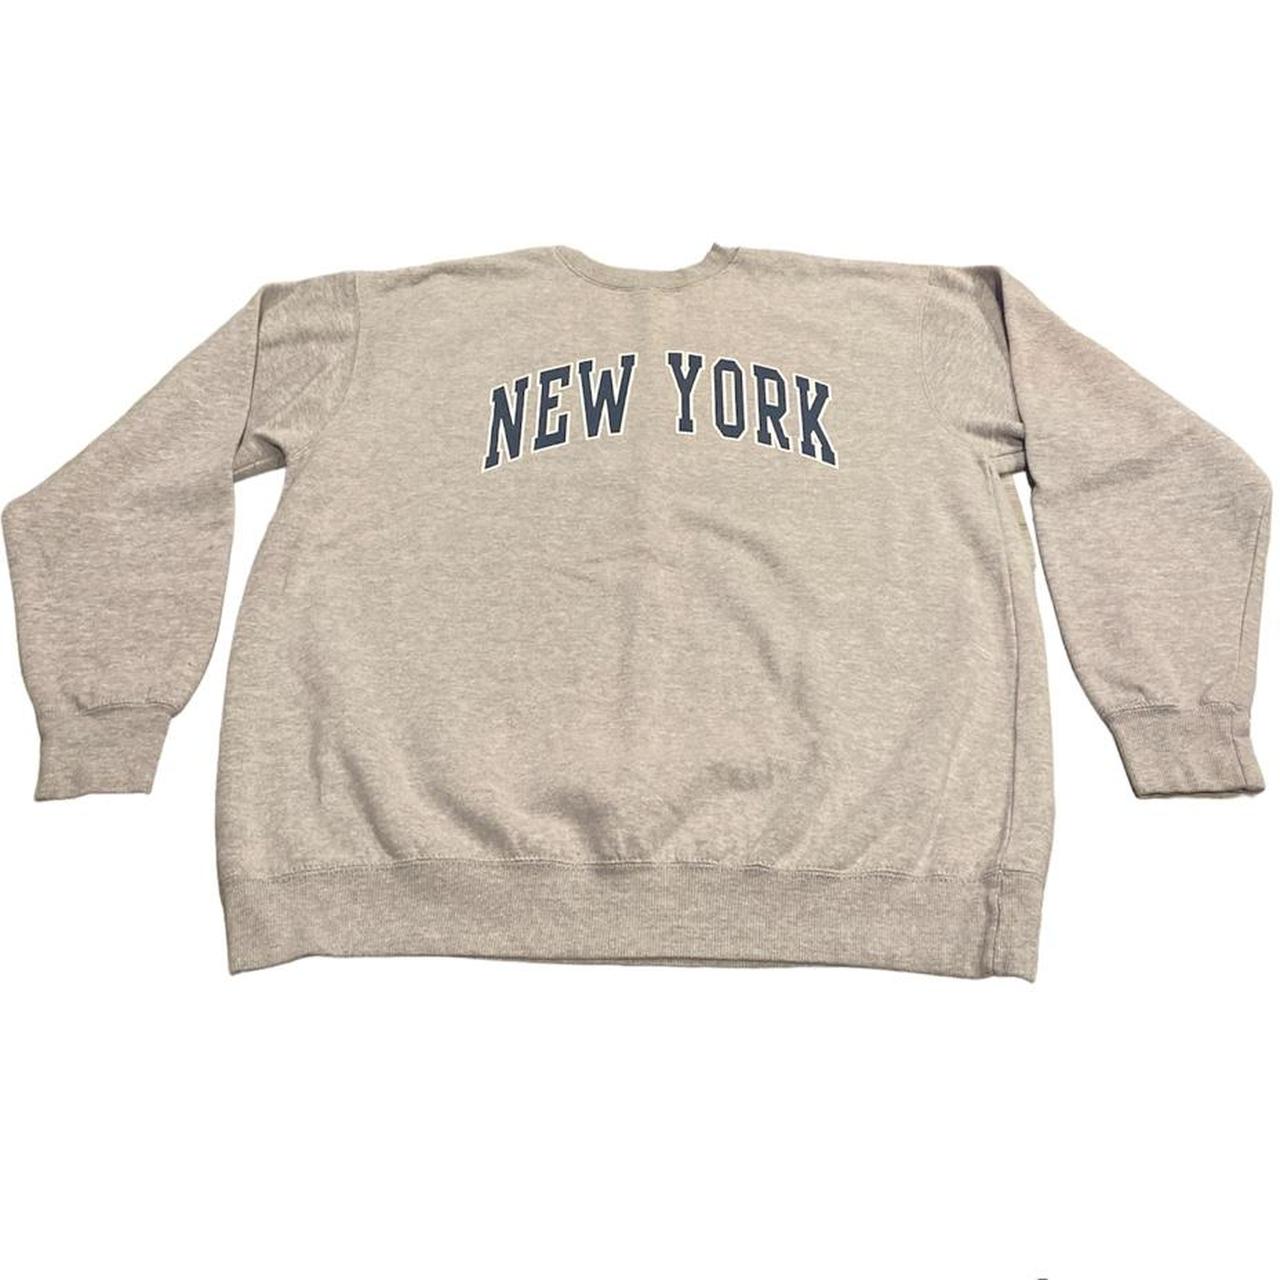 brandy melville john galt new york crewneck sweatshirt - Depop